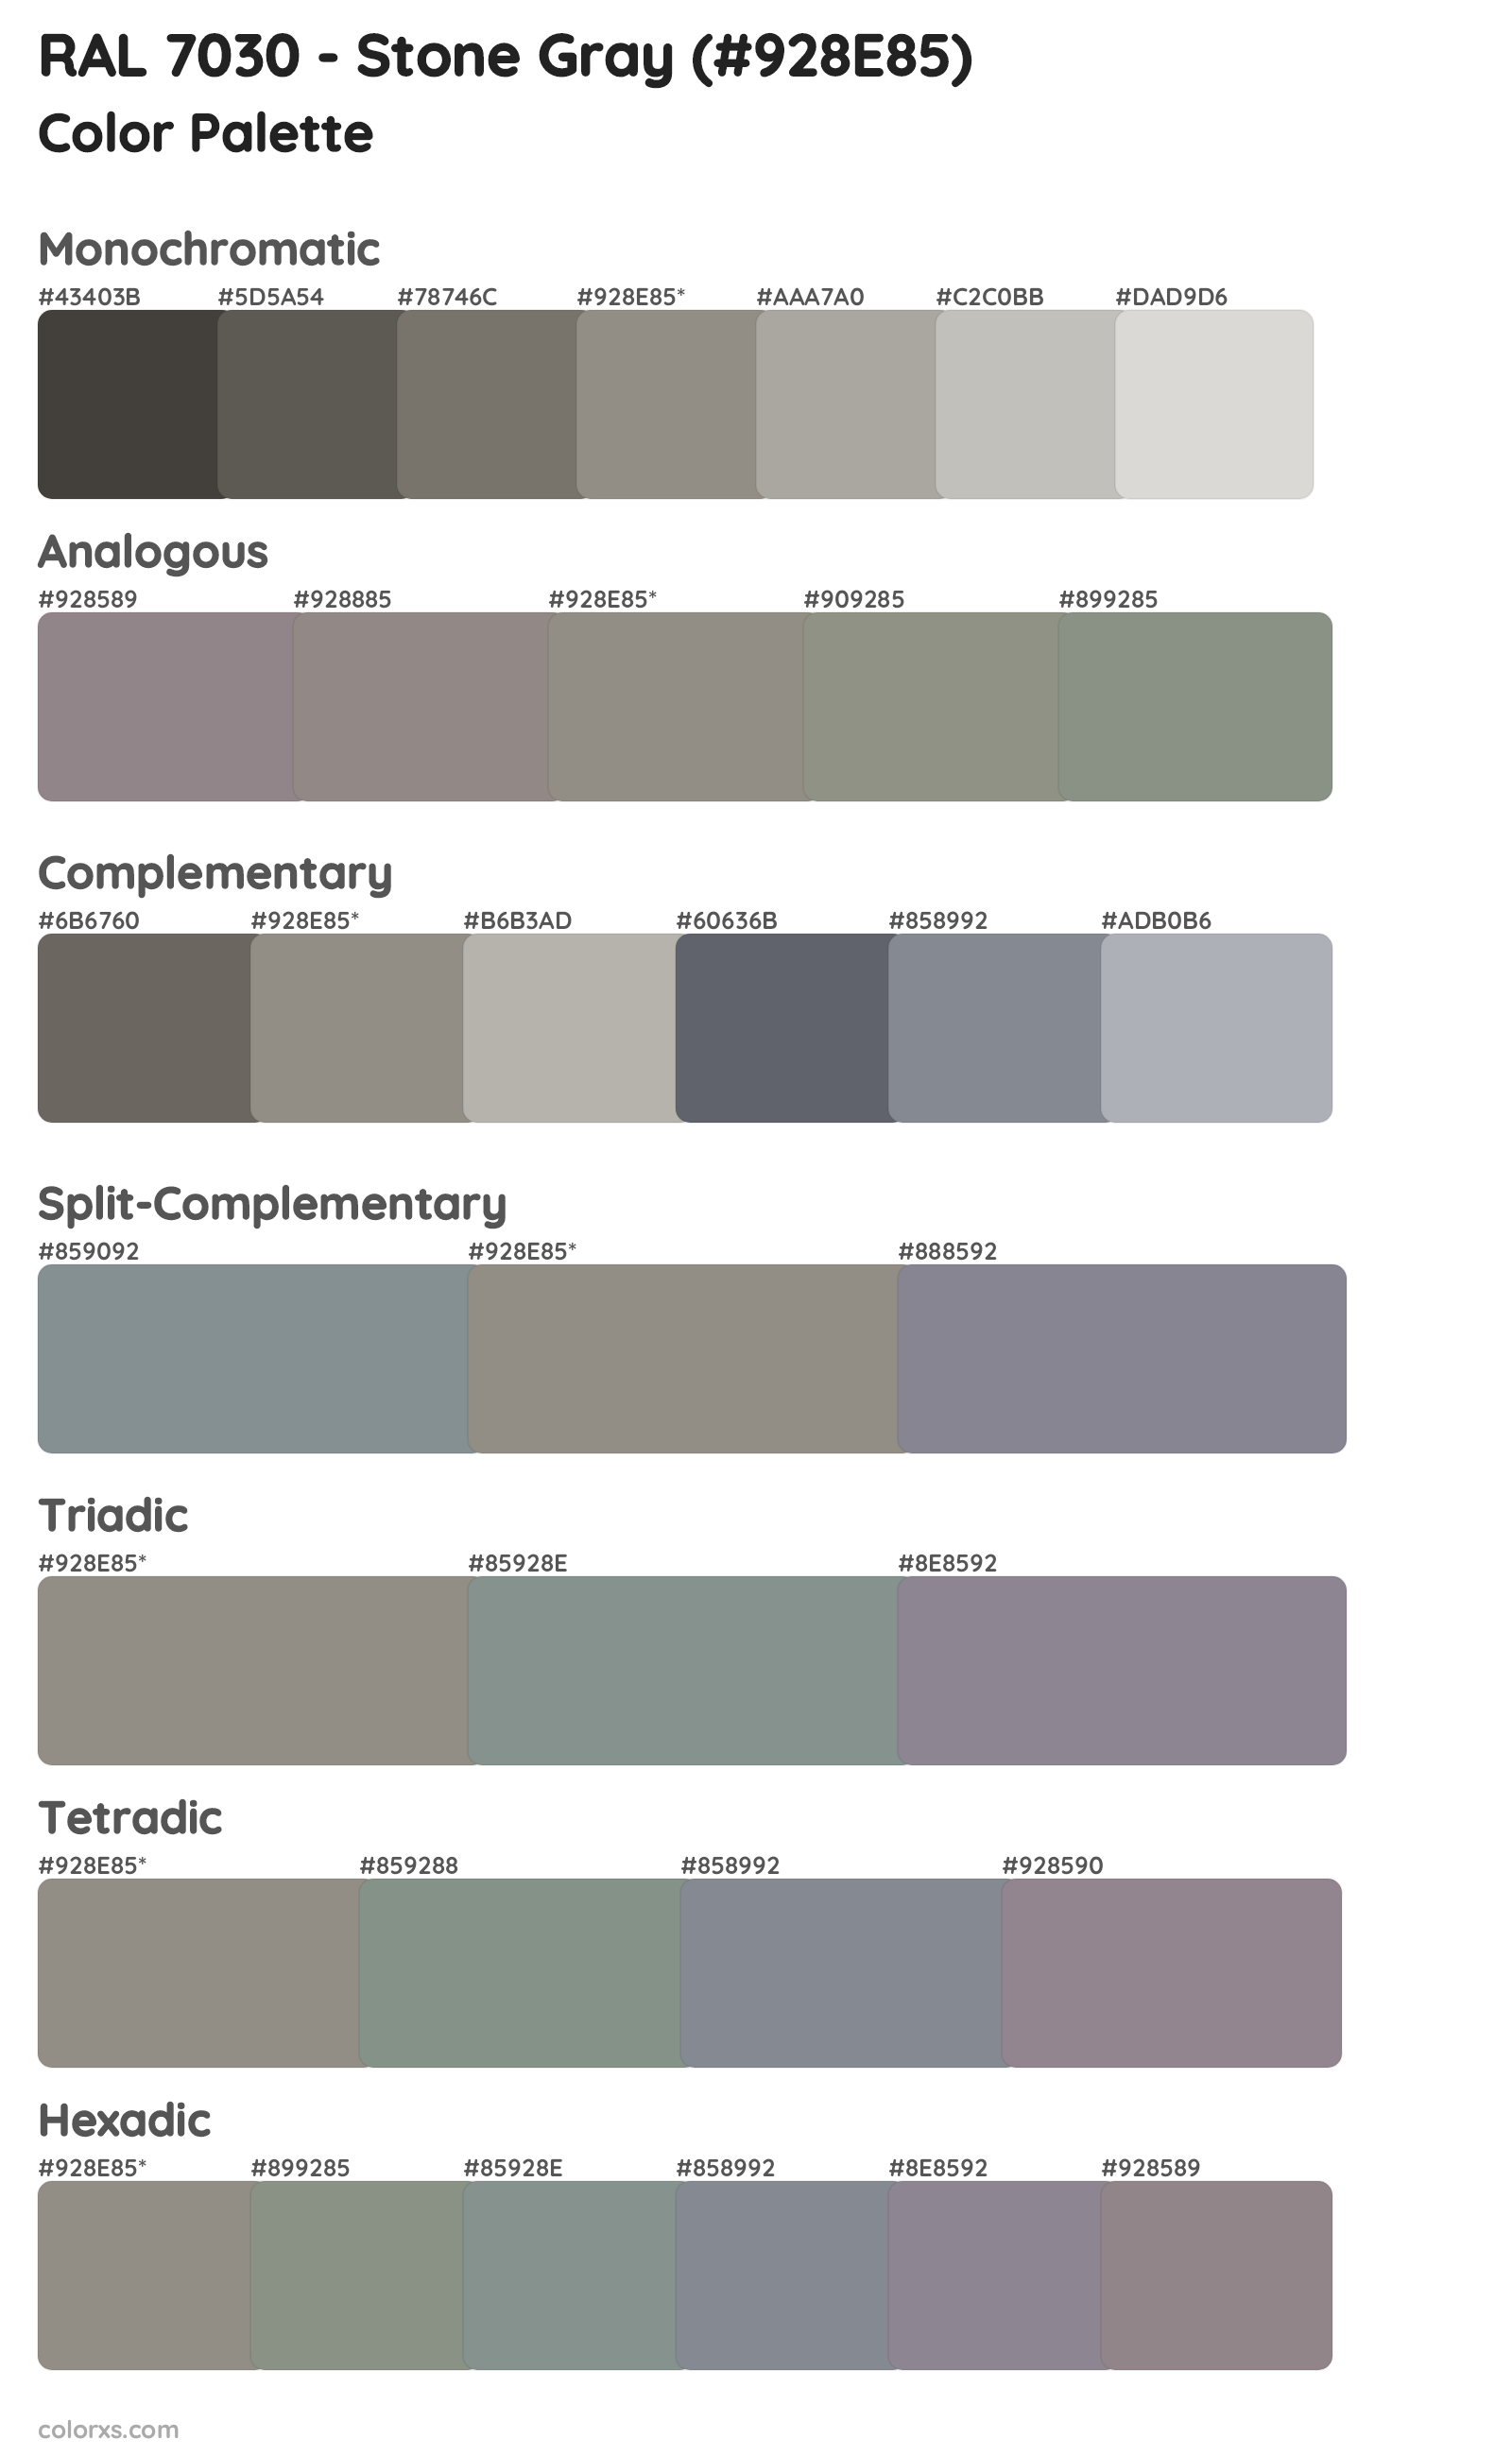 RAL 7030 - Stone Gray Color Scheme Palettes